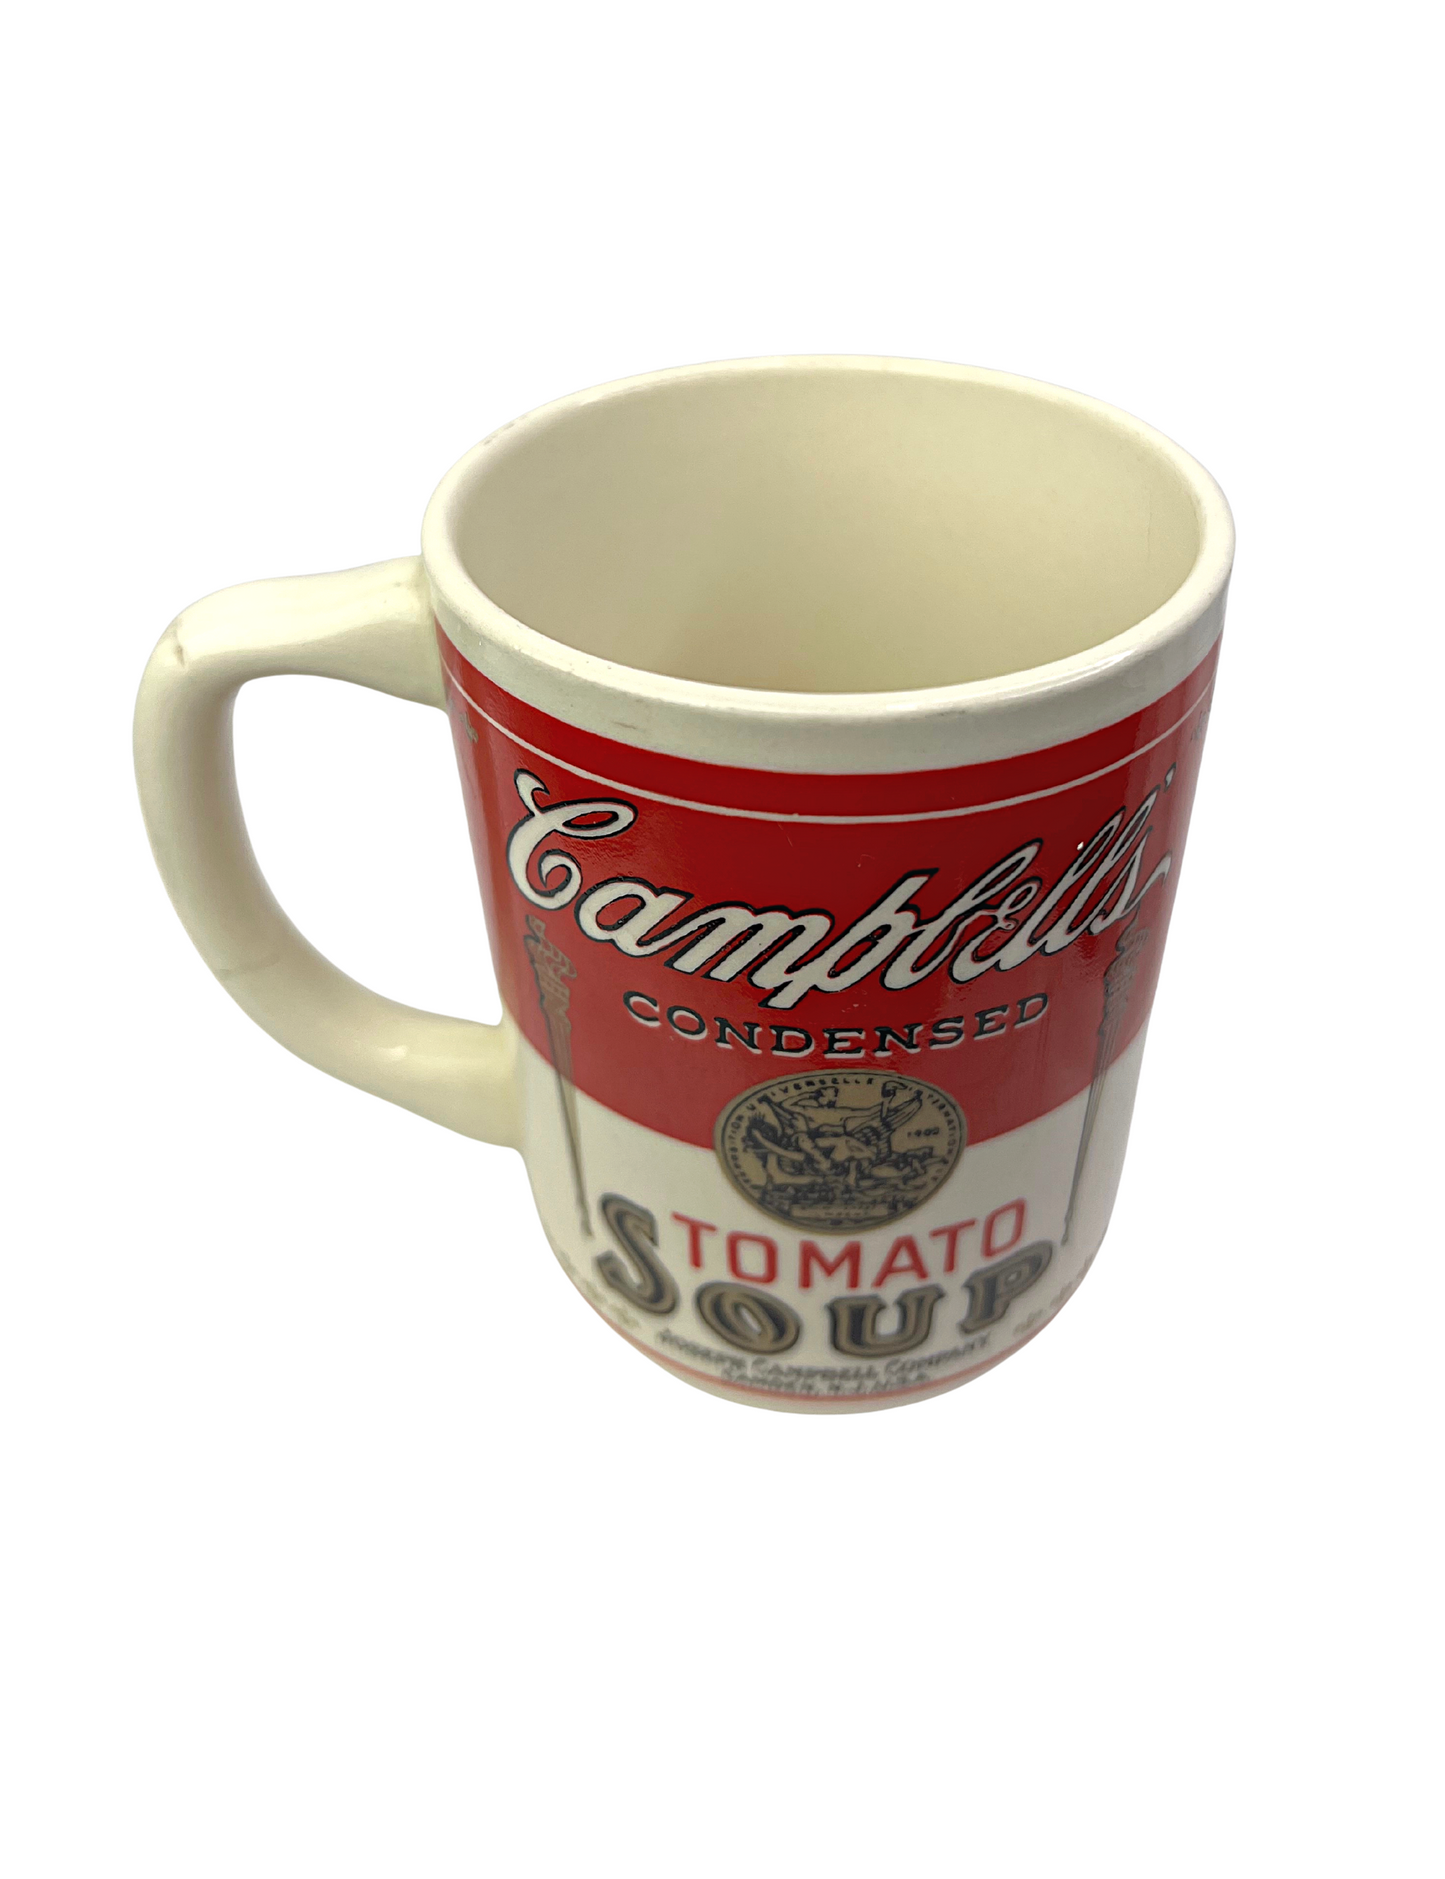 1970’s Campbell’s Tomato Soup Coffee Mug